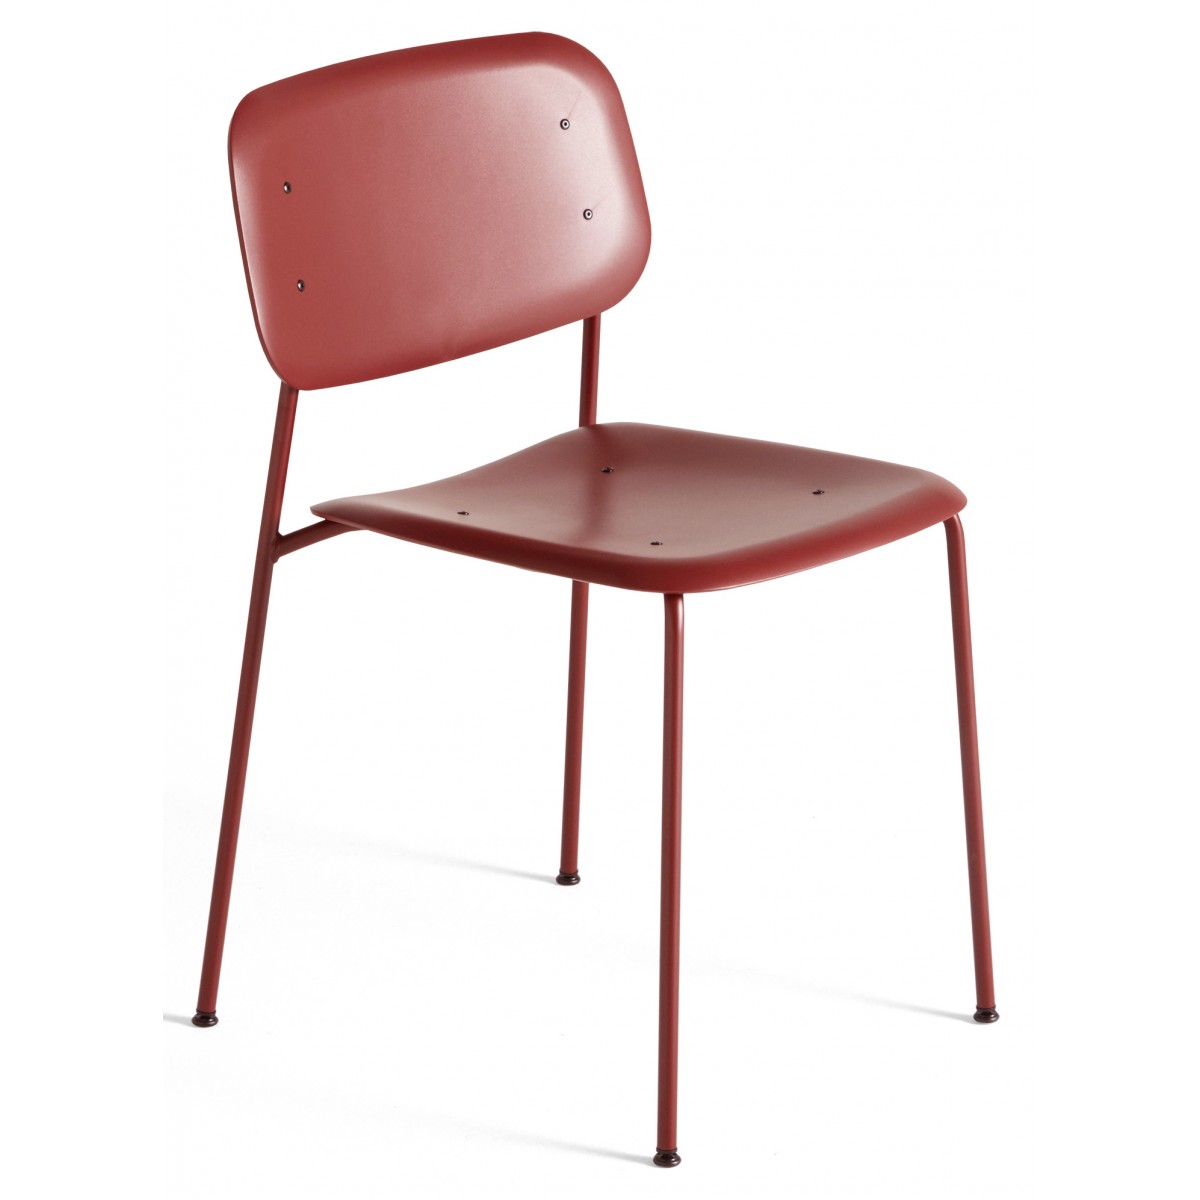 Fall red + Fall red legs - Soft Edge 45 polypropylene chair